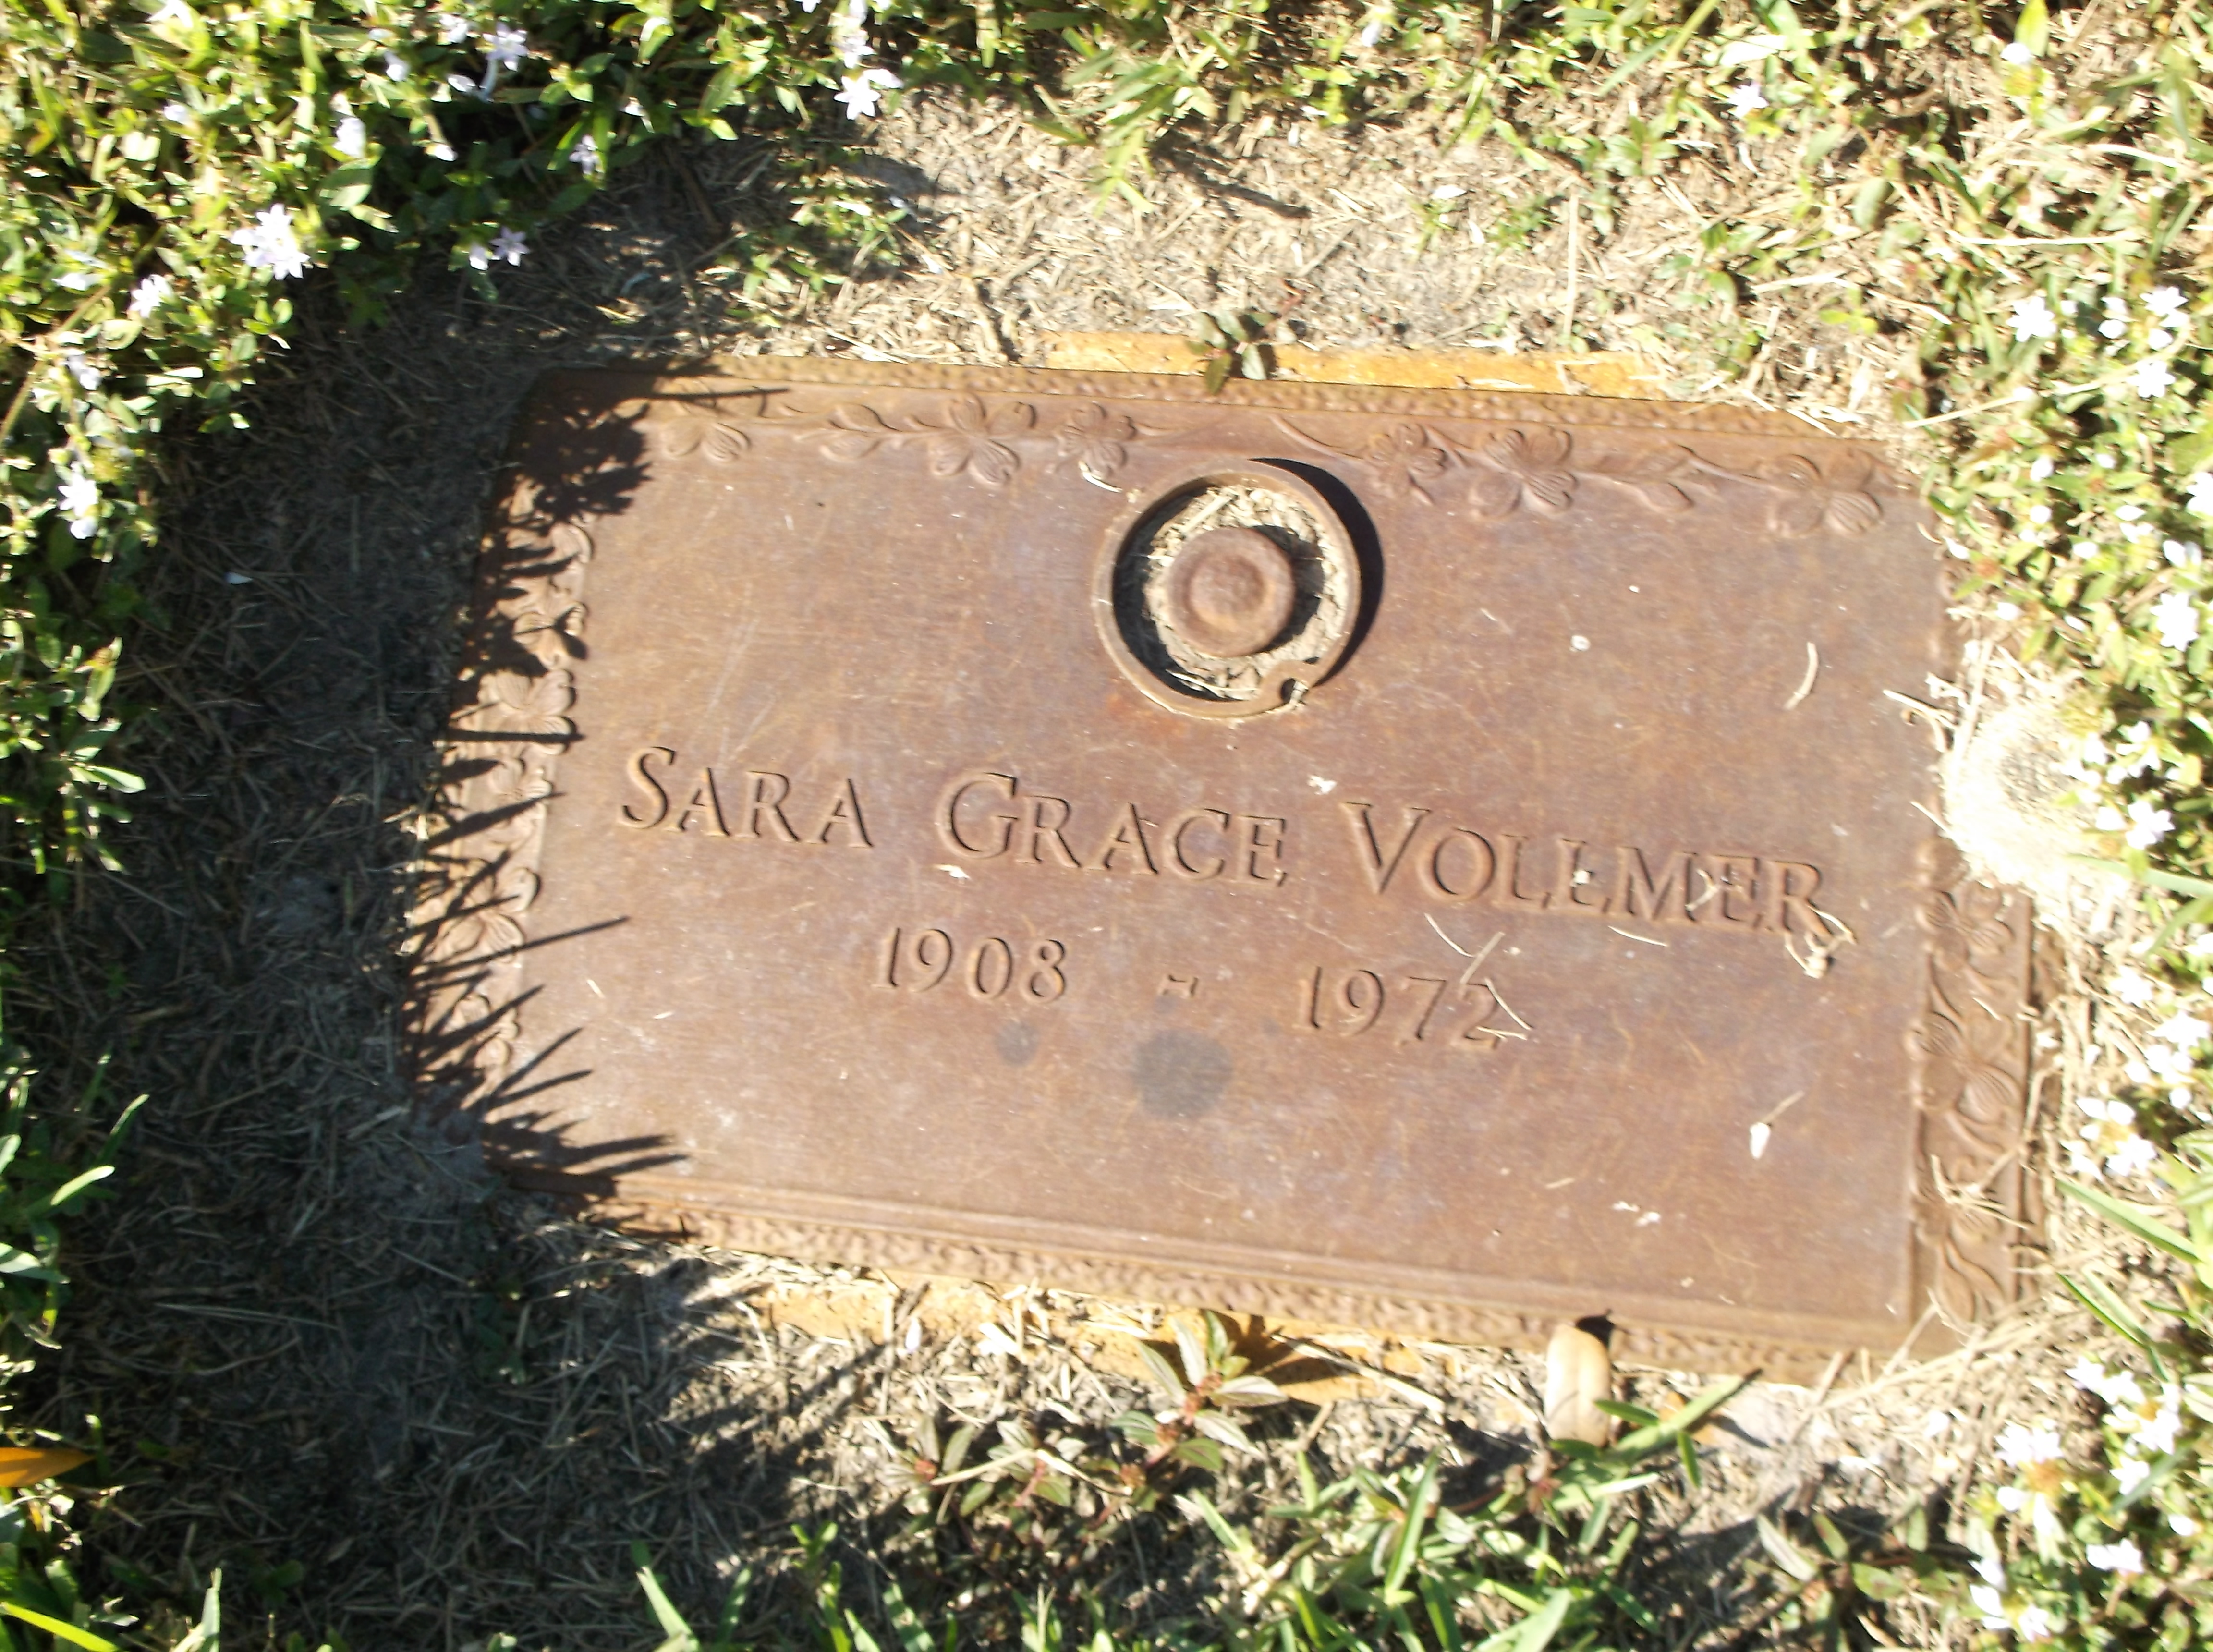 Sara Grace Vollmer